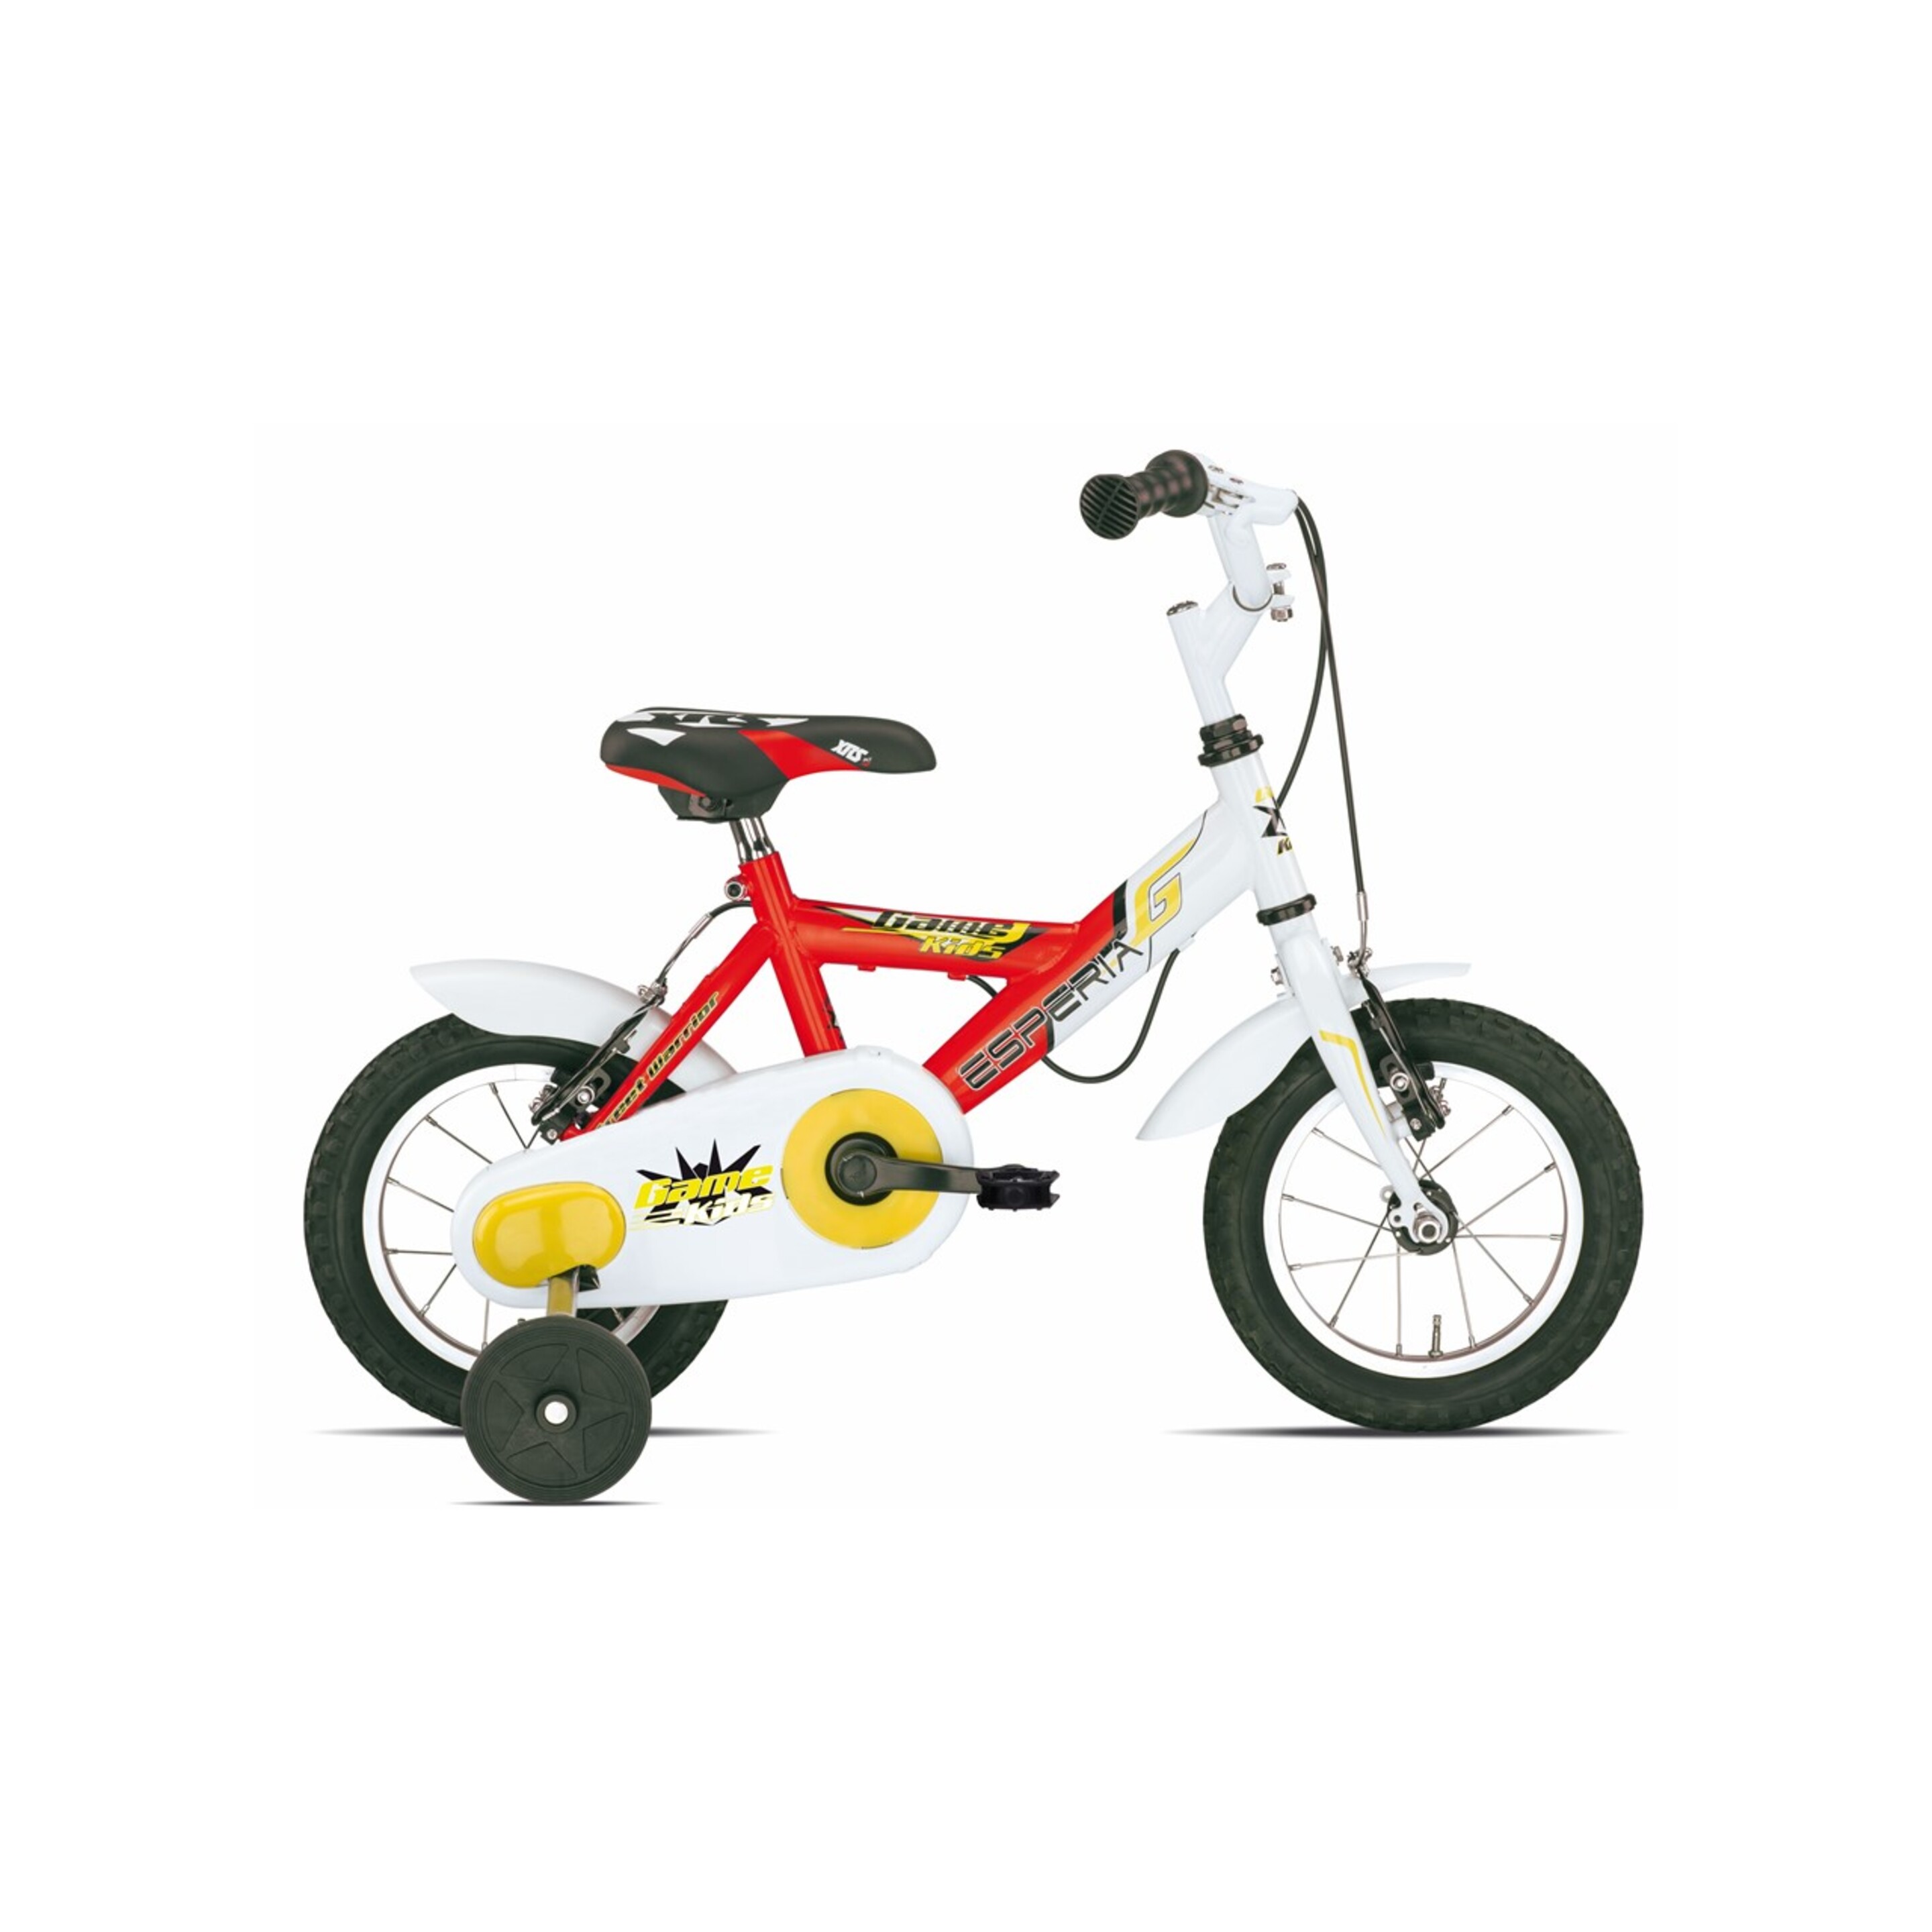 Bicicleta Infantil Game Boy 9900 Esperia - rojo - 